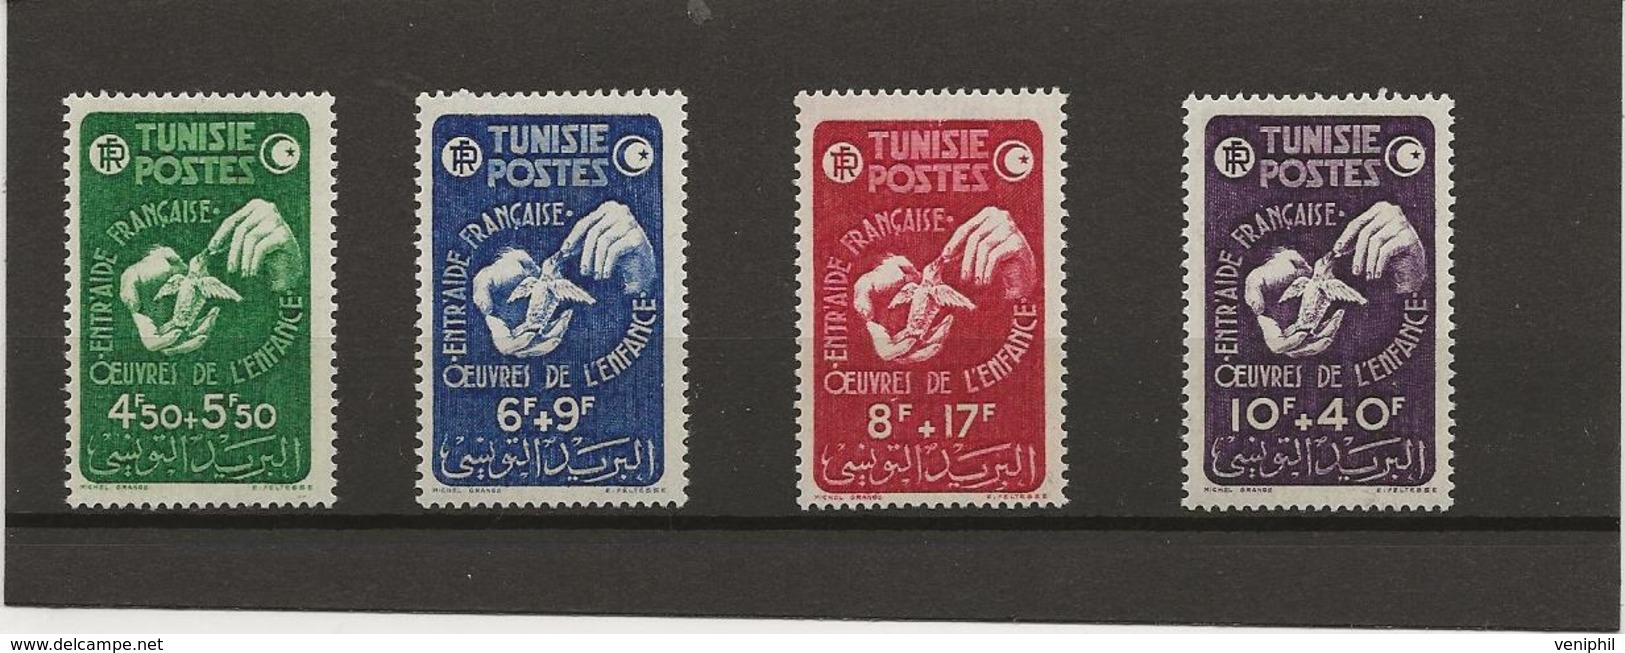 TUNISIE - N° 320 A 323 NEUF SANS CHARNIERE  -ANNEE 1947 - Nuovi